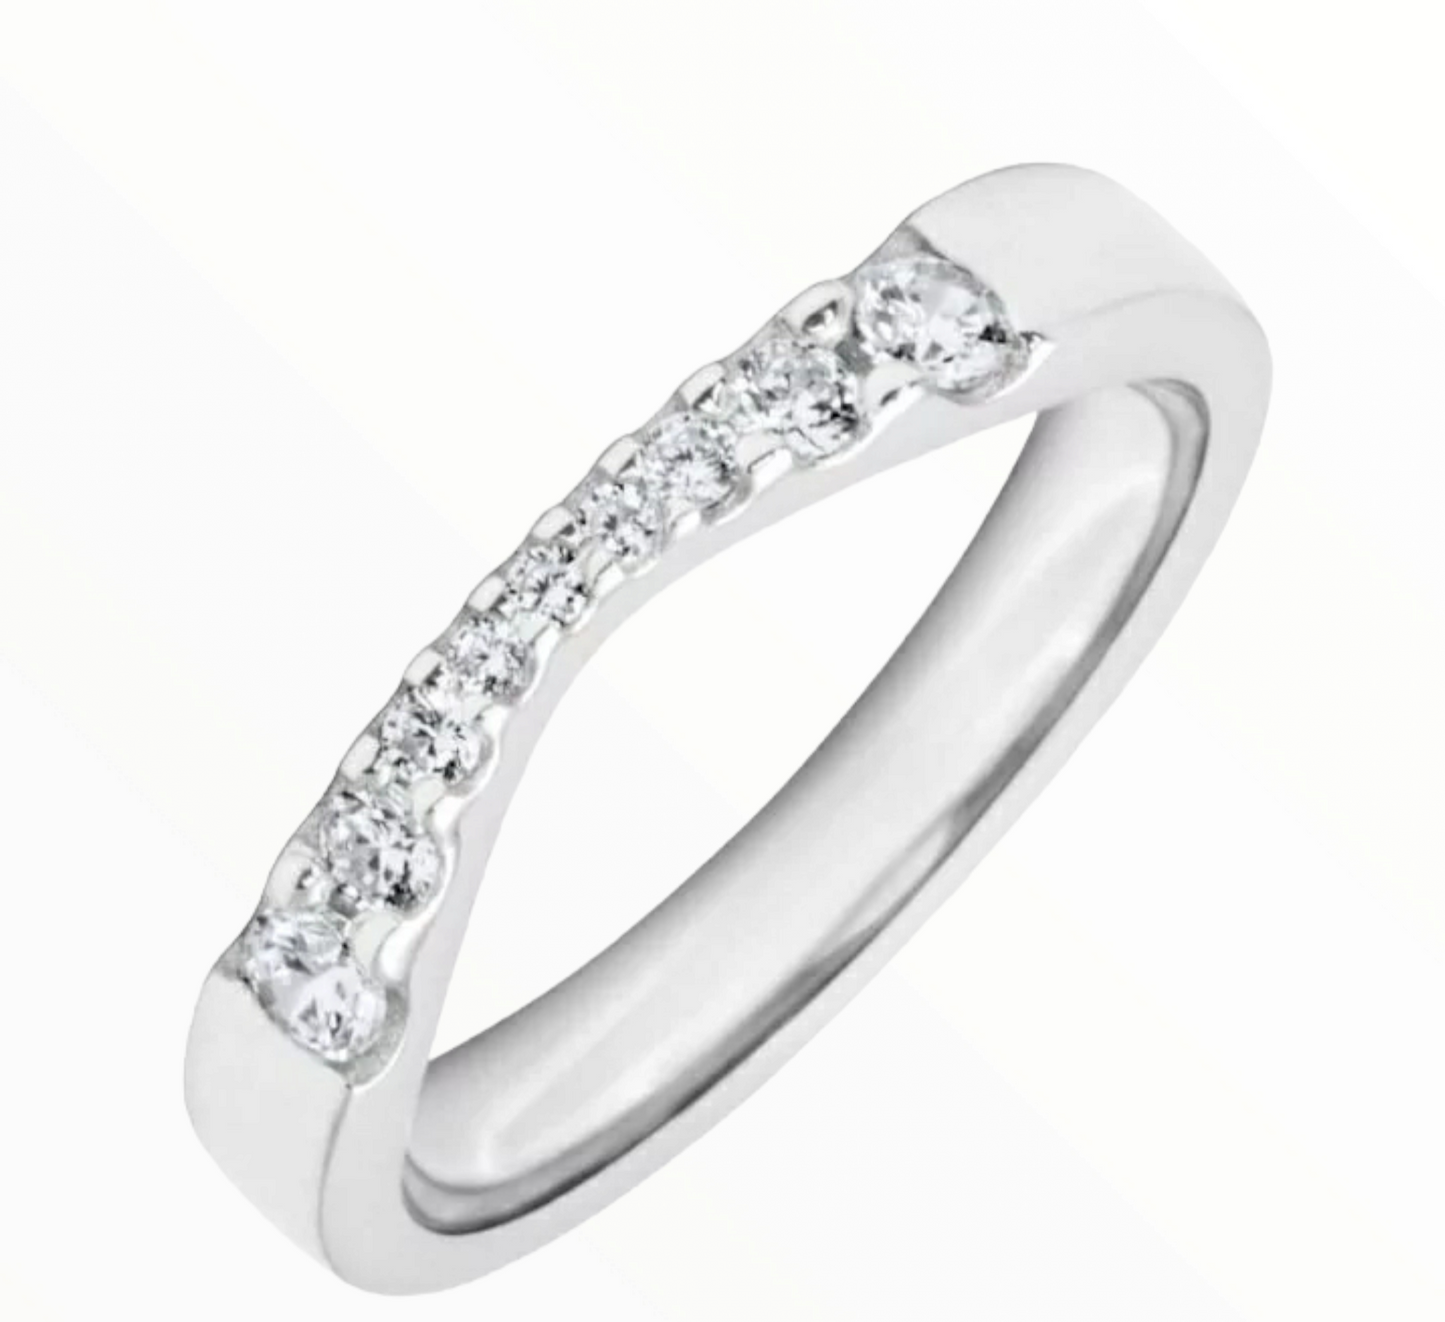 White gold u shape diamond wedding ring